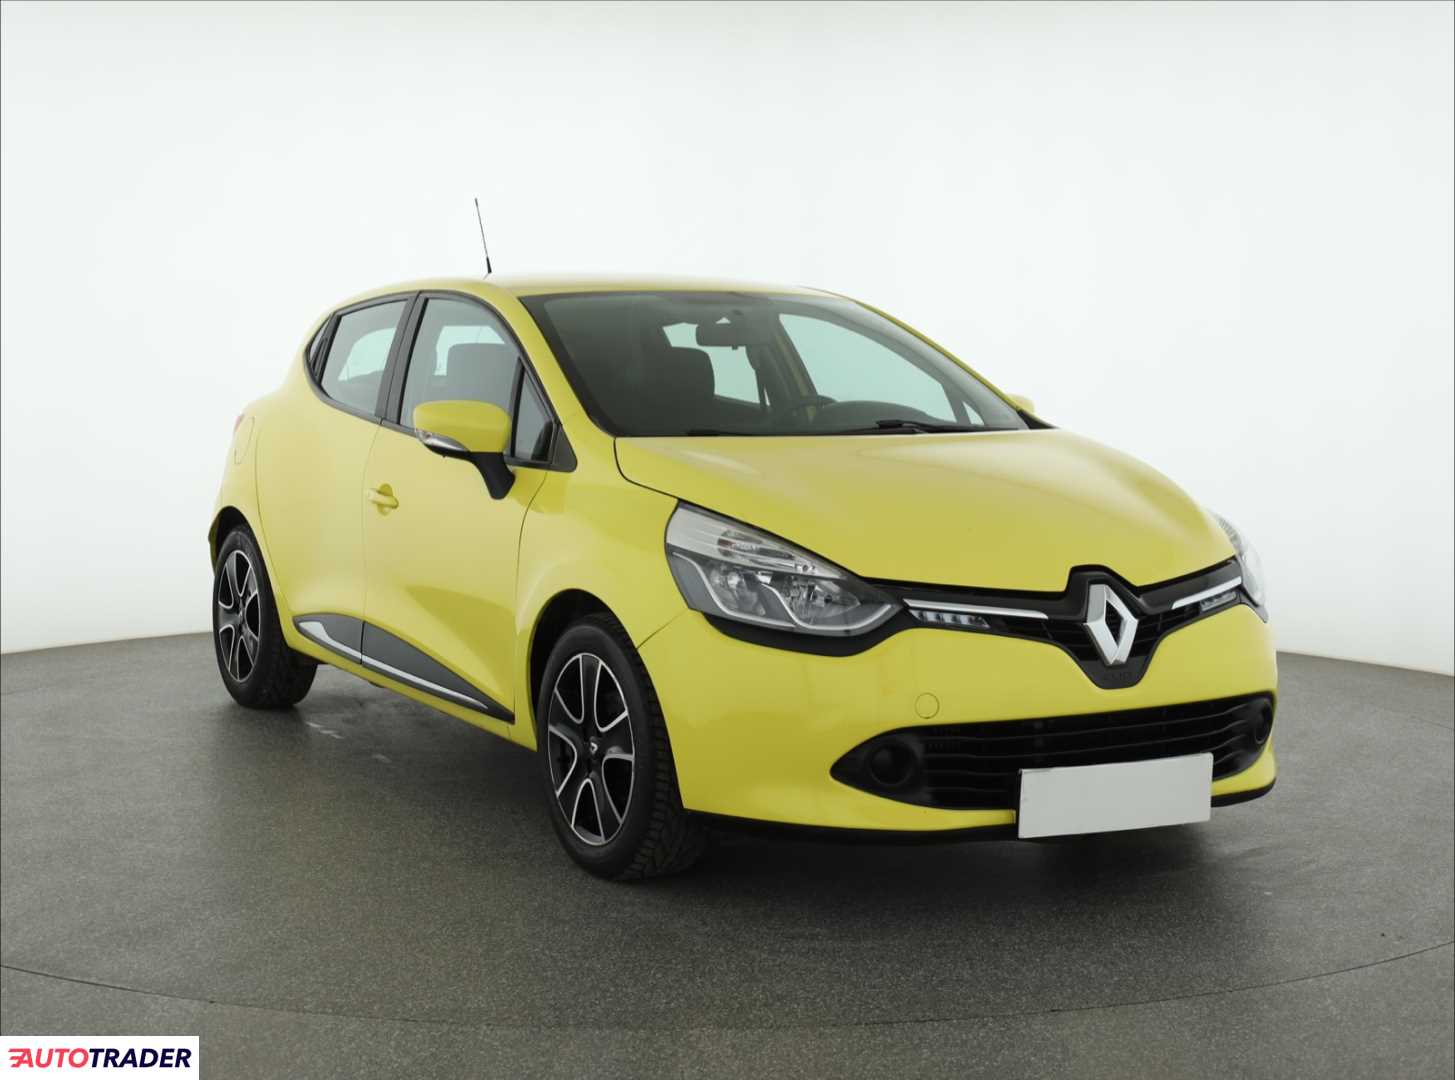 Renault Clio 2014 0.9 88 KM